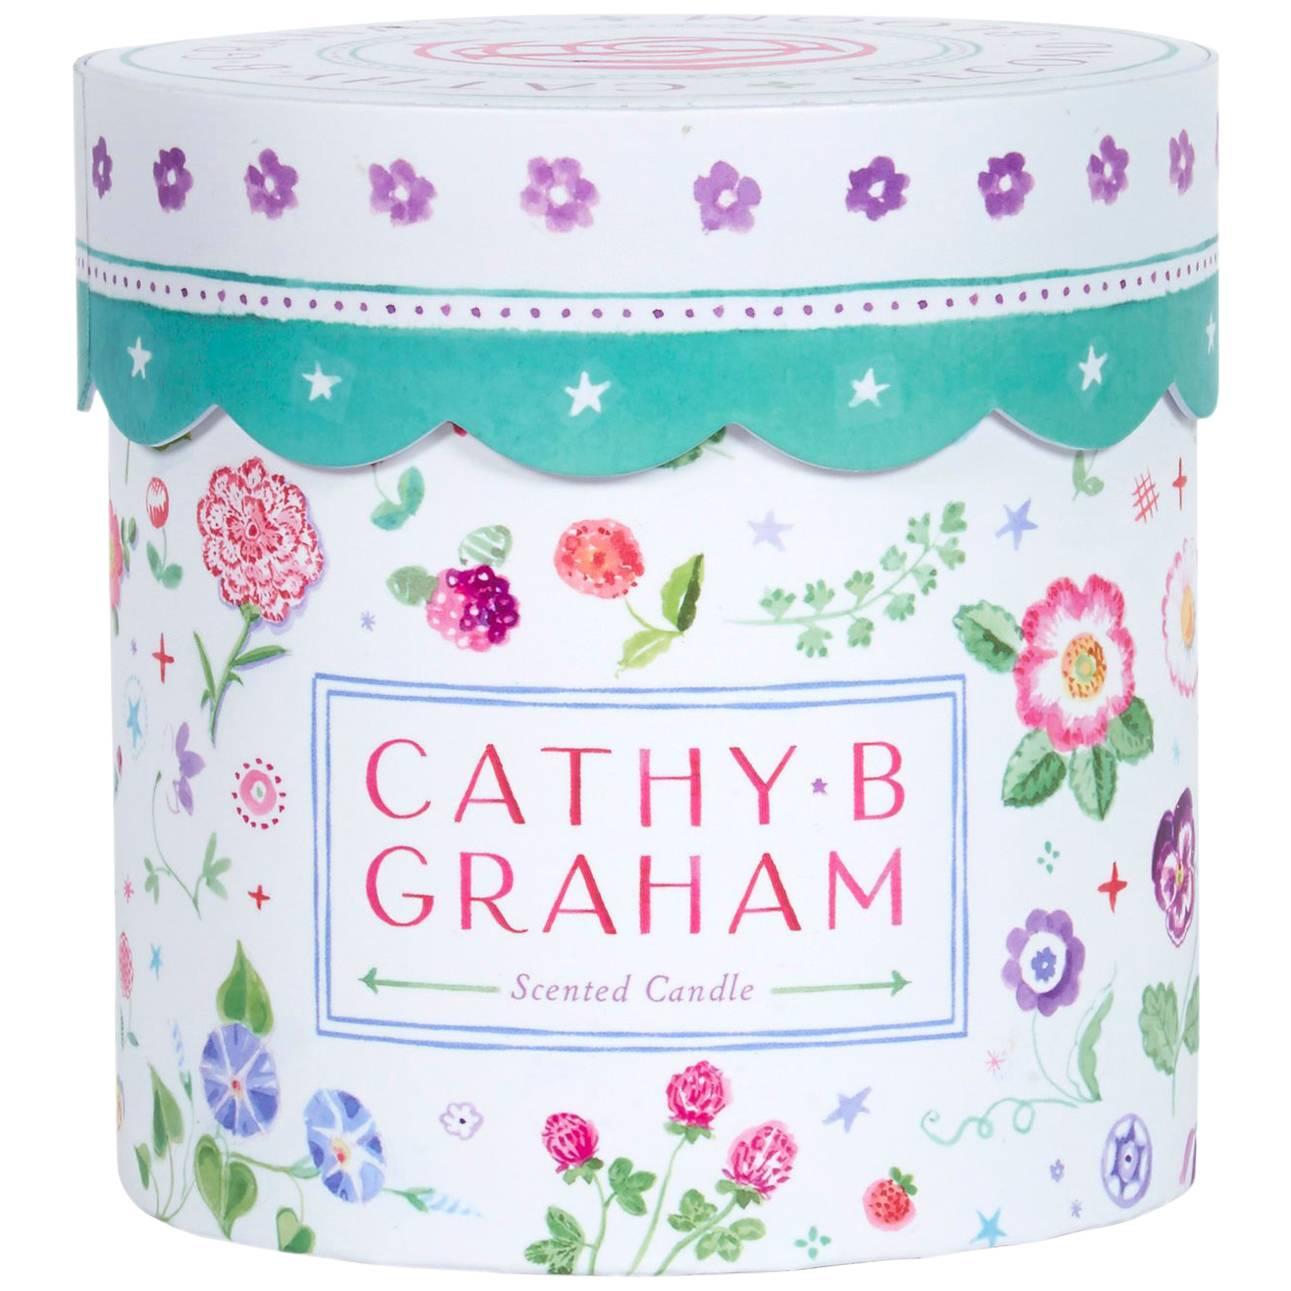 Cathy Graham Custom Designed Candle